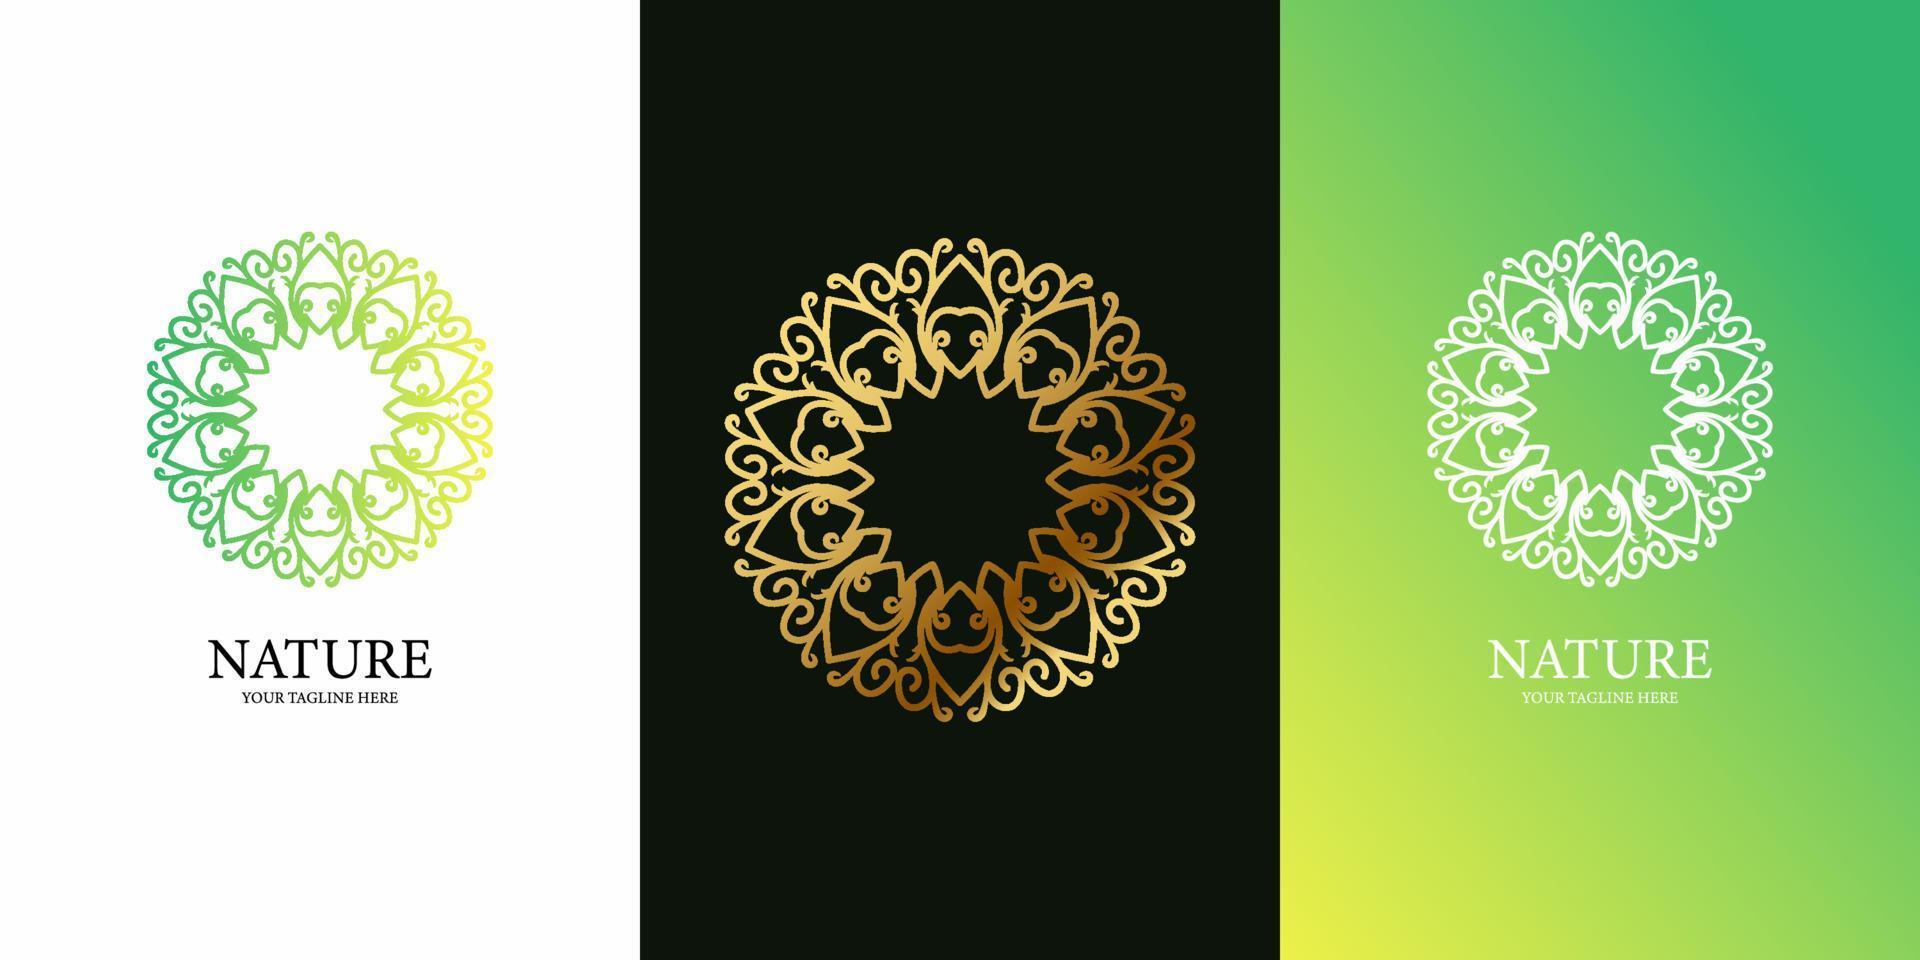 Flower, boutique or ornament logo template design. vector